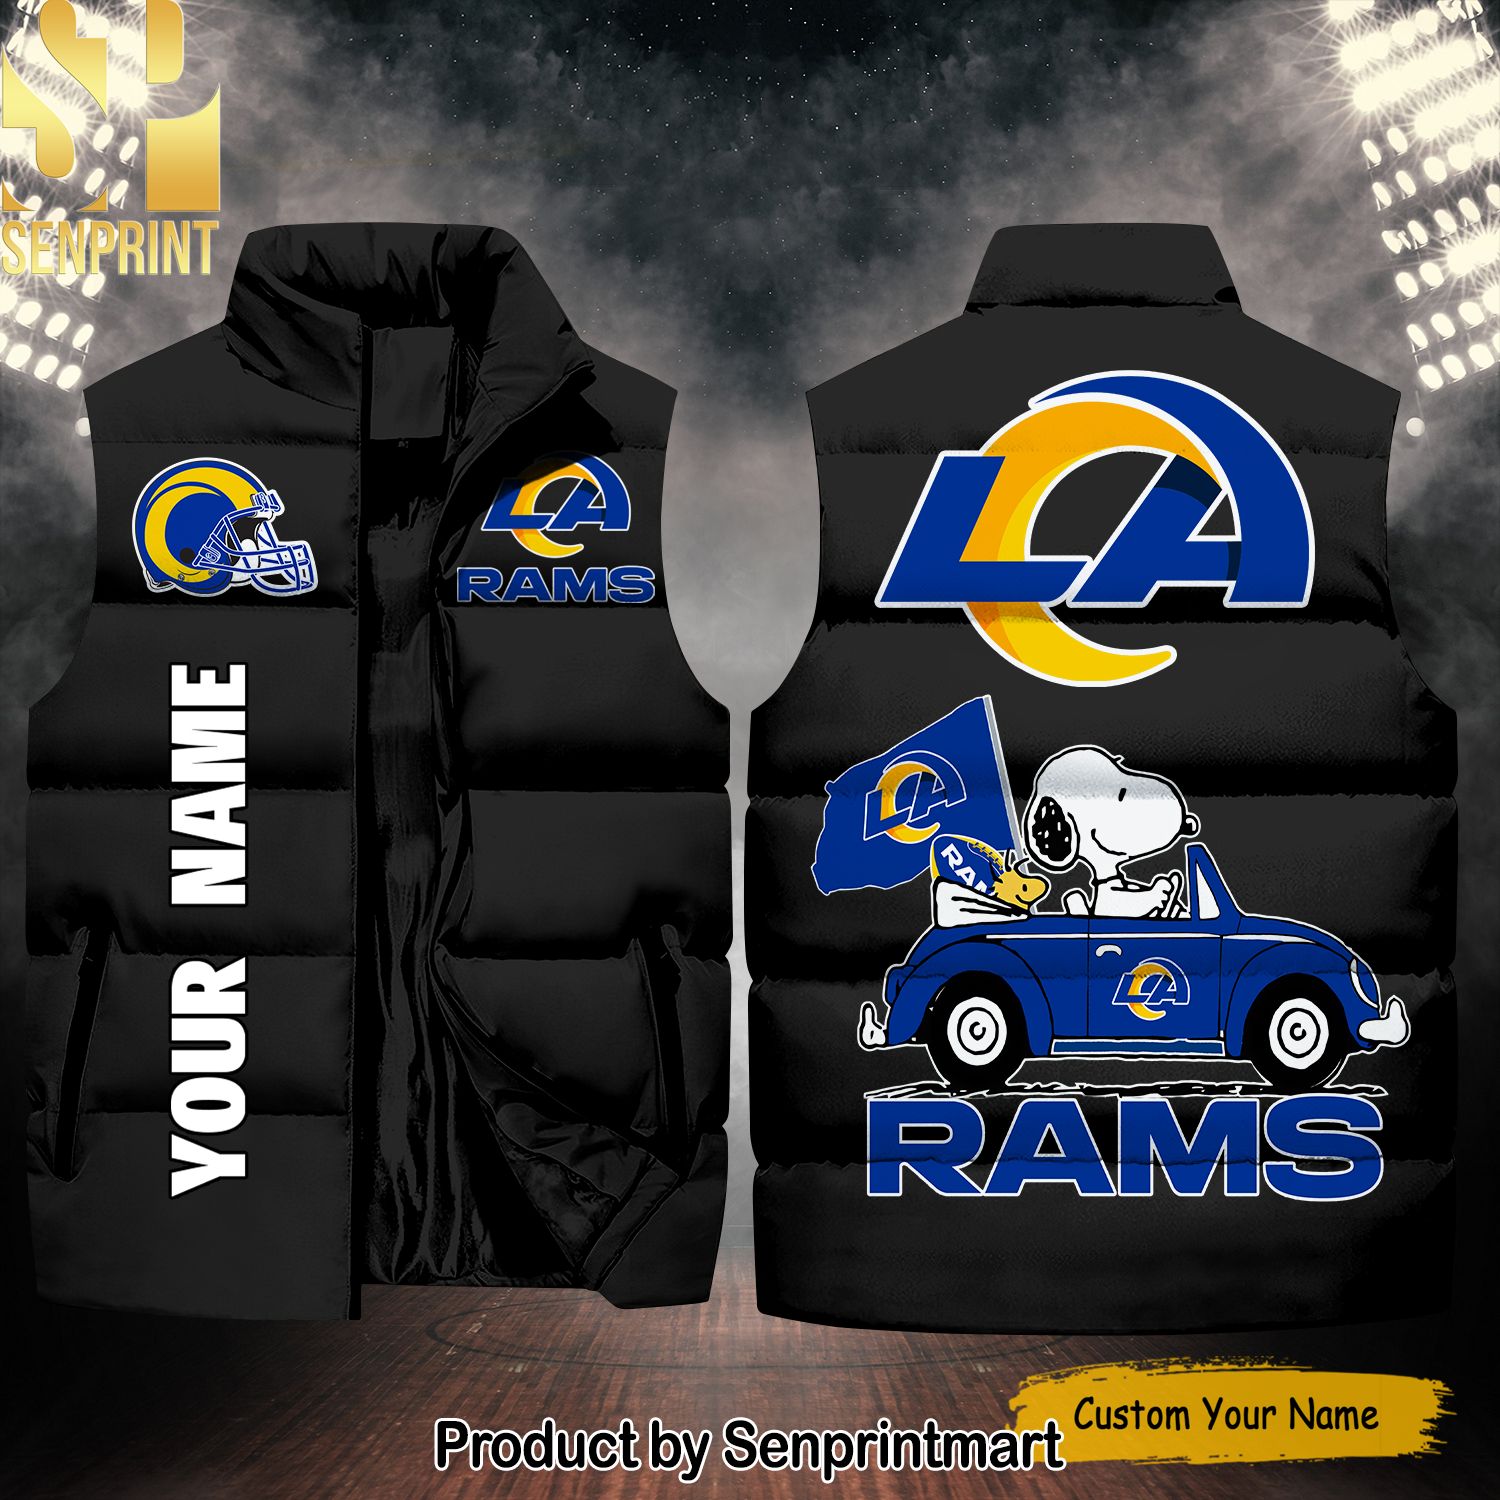 National Football League Los Angeles Rams Peanuts Snoopy Hot Outfit Sleeveless Jacket